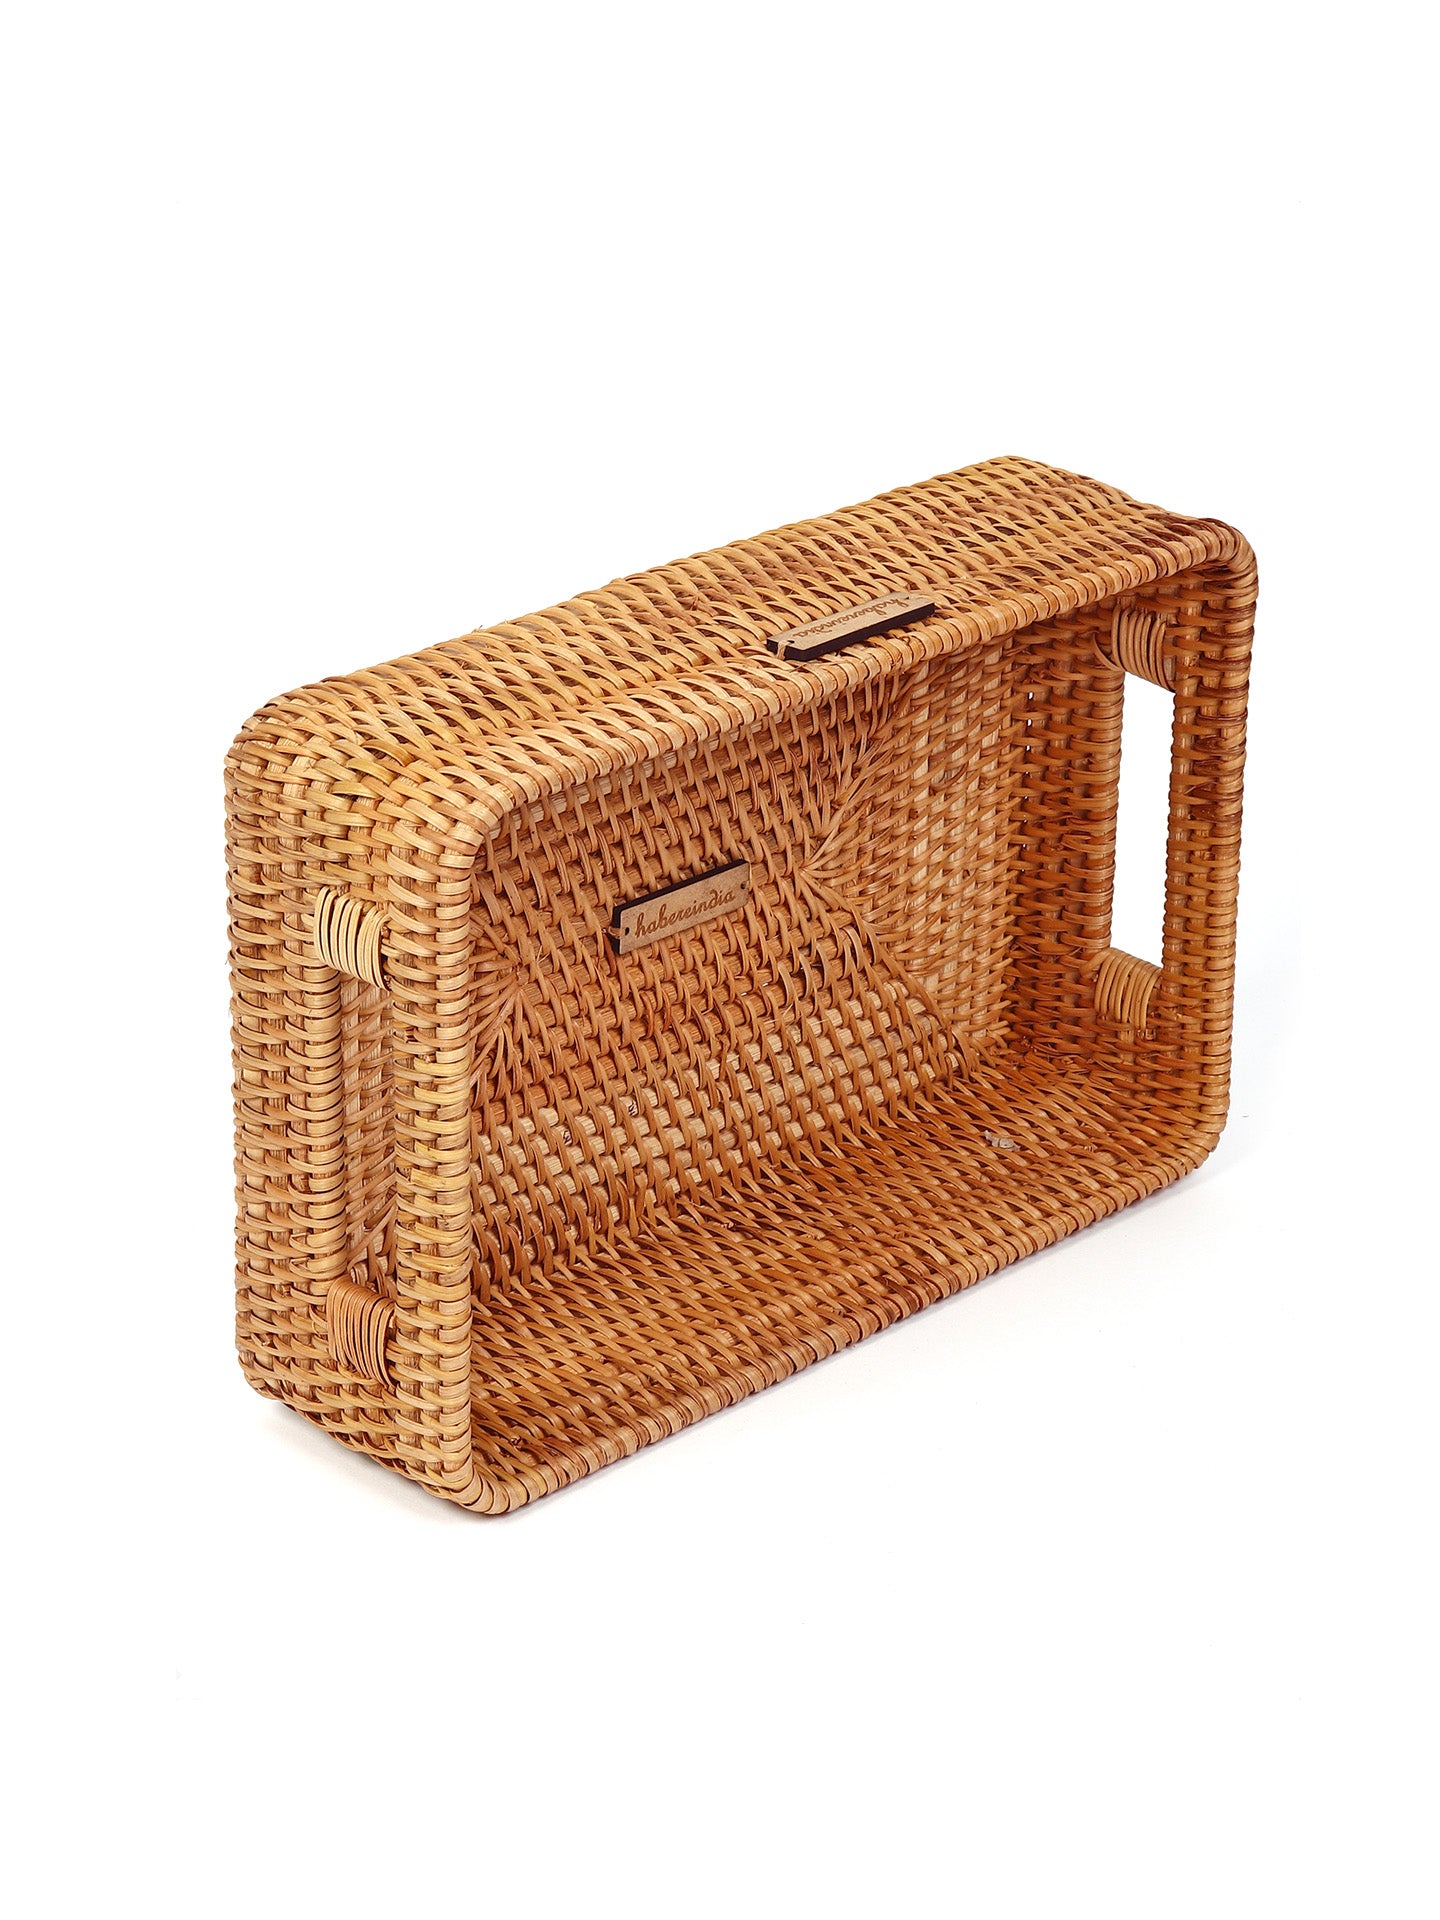 Rattan Tray | Bamboo Storage Baskets